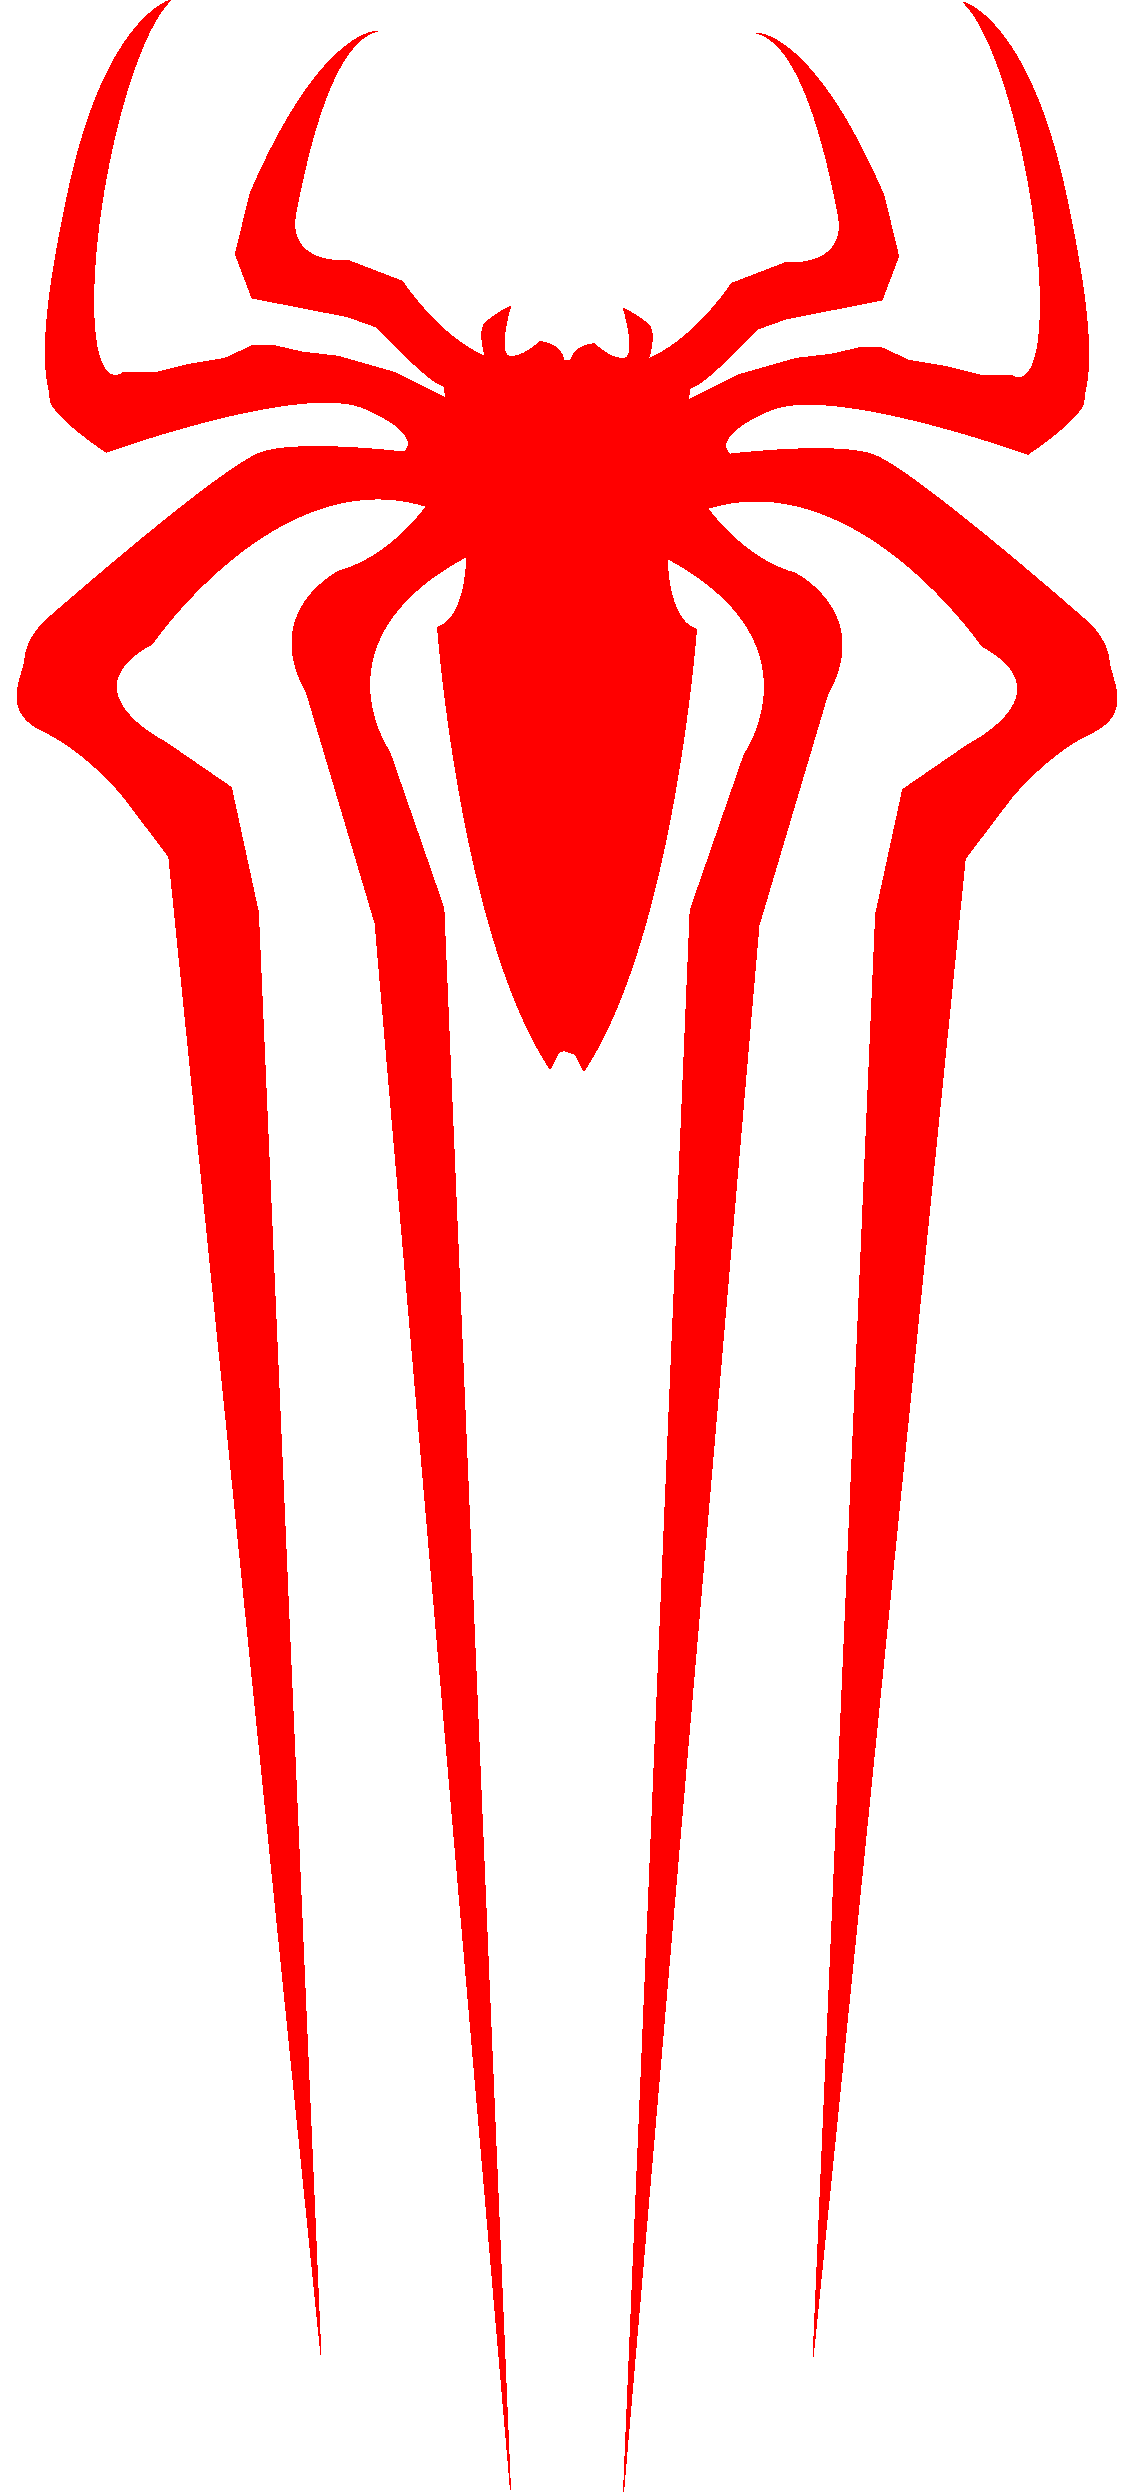 Spiderman Logo PNG - 100761